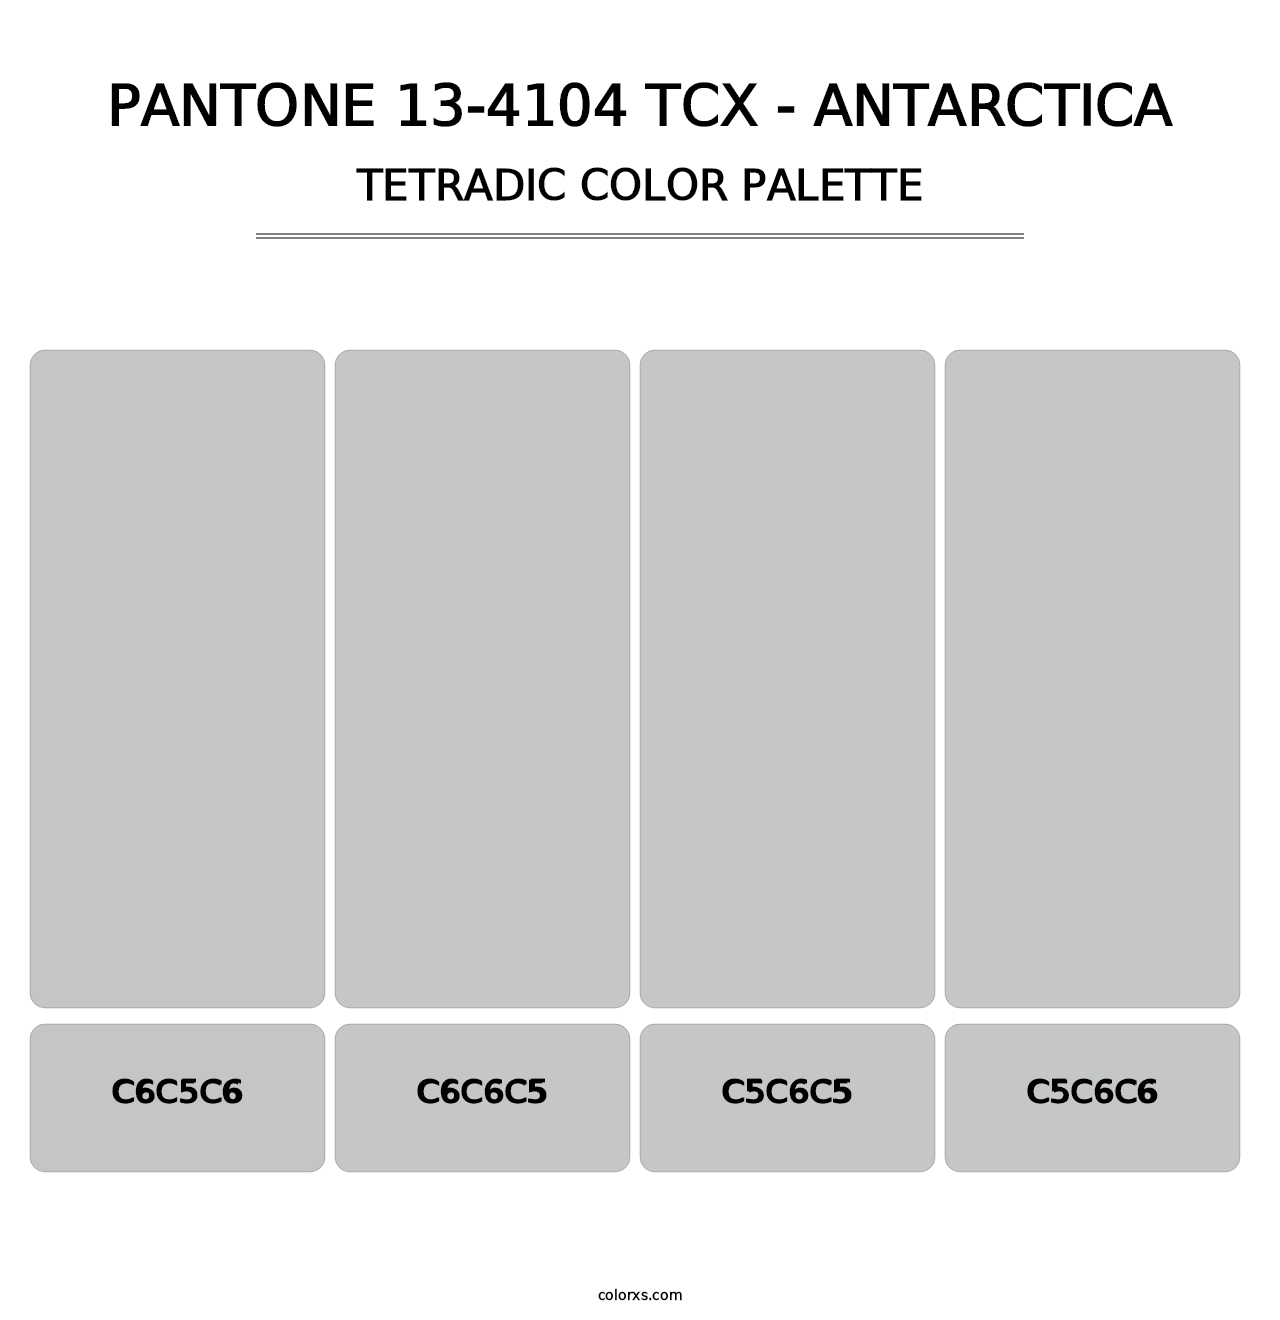 PANTONE 13-4104 TCX - Antarctica - Tetradic Color Palette